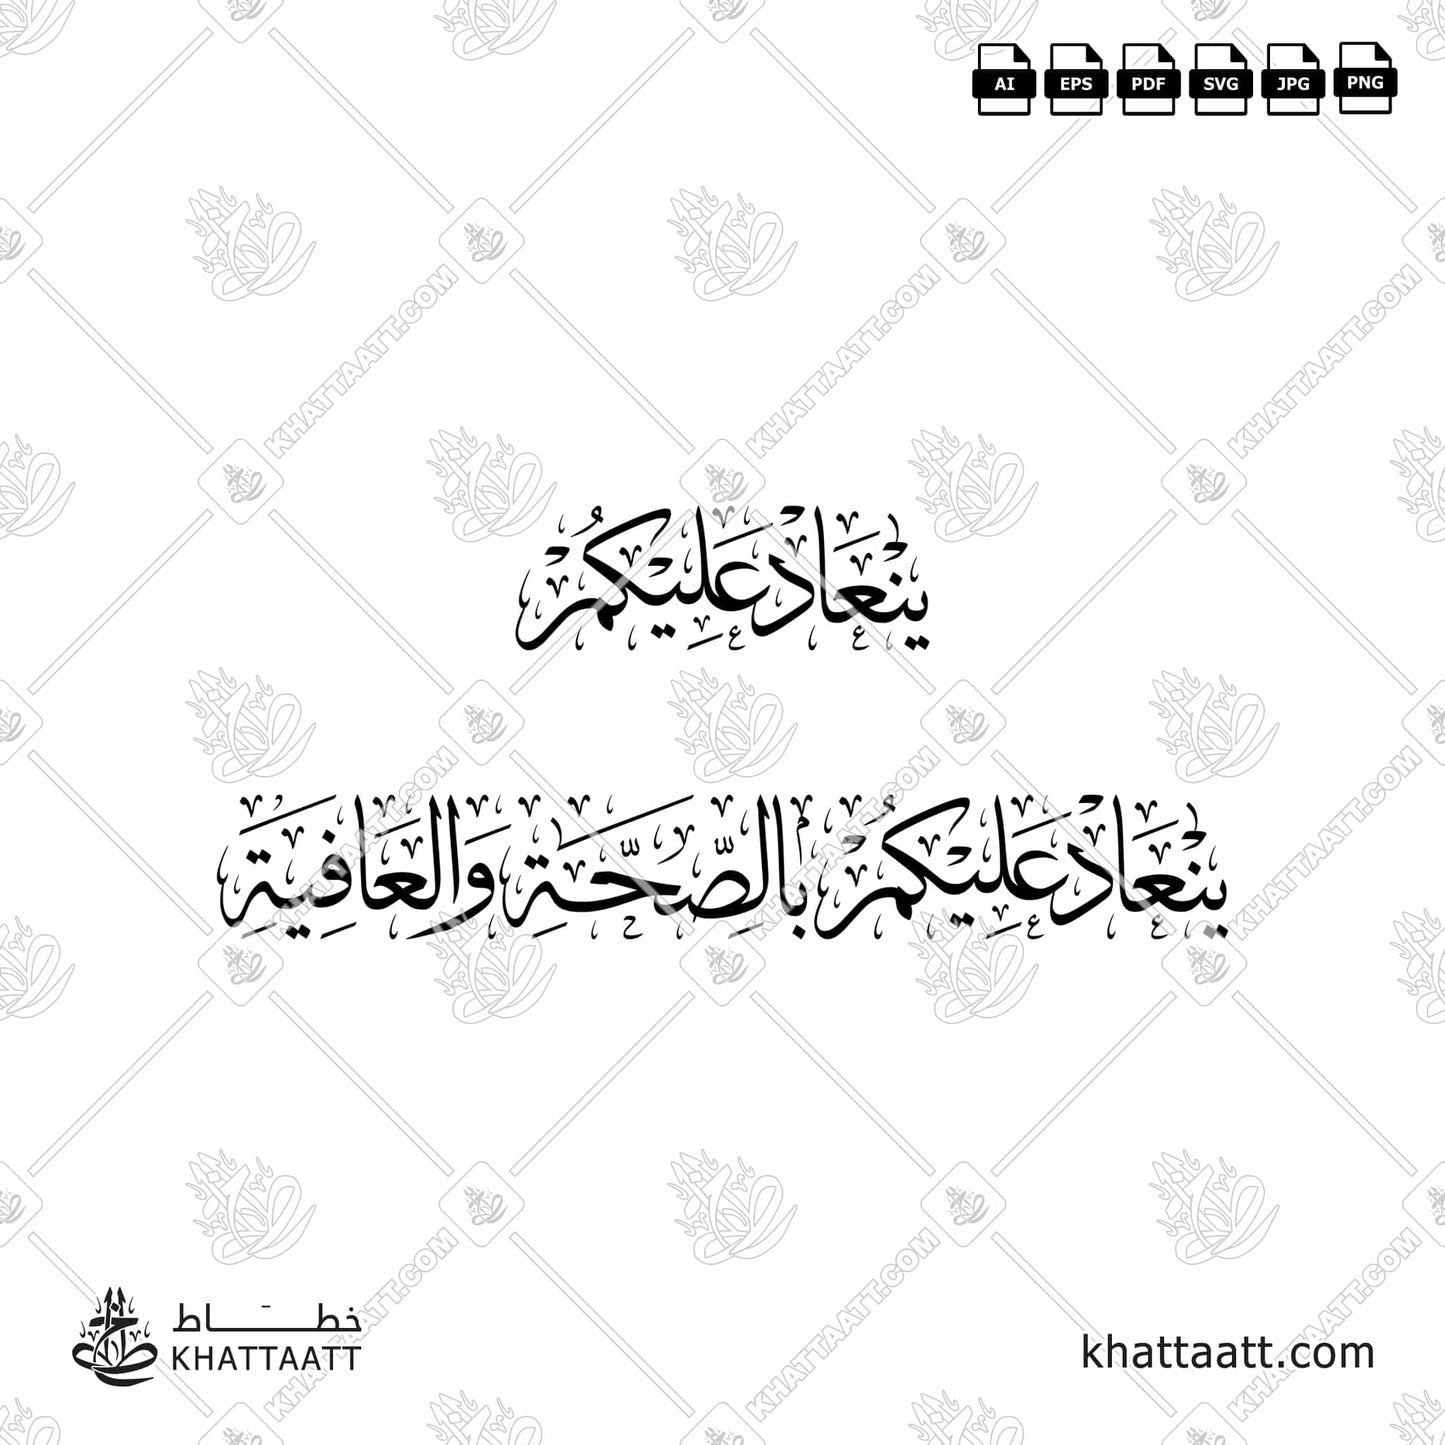 Arabic Calligraphy of ينعاد عليكم and ينعاد عليكم بالصحة والعافية in Thuluth Script خط الثلث.